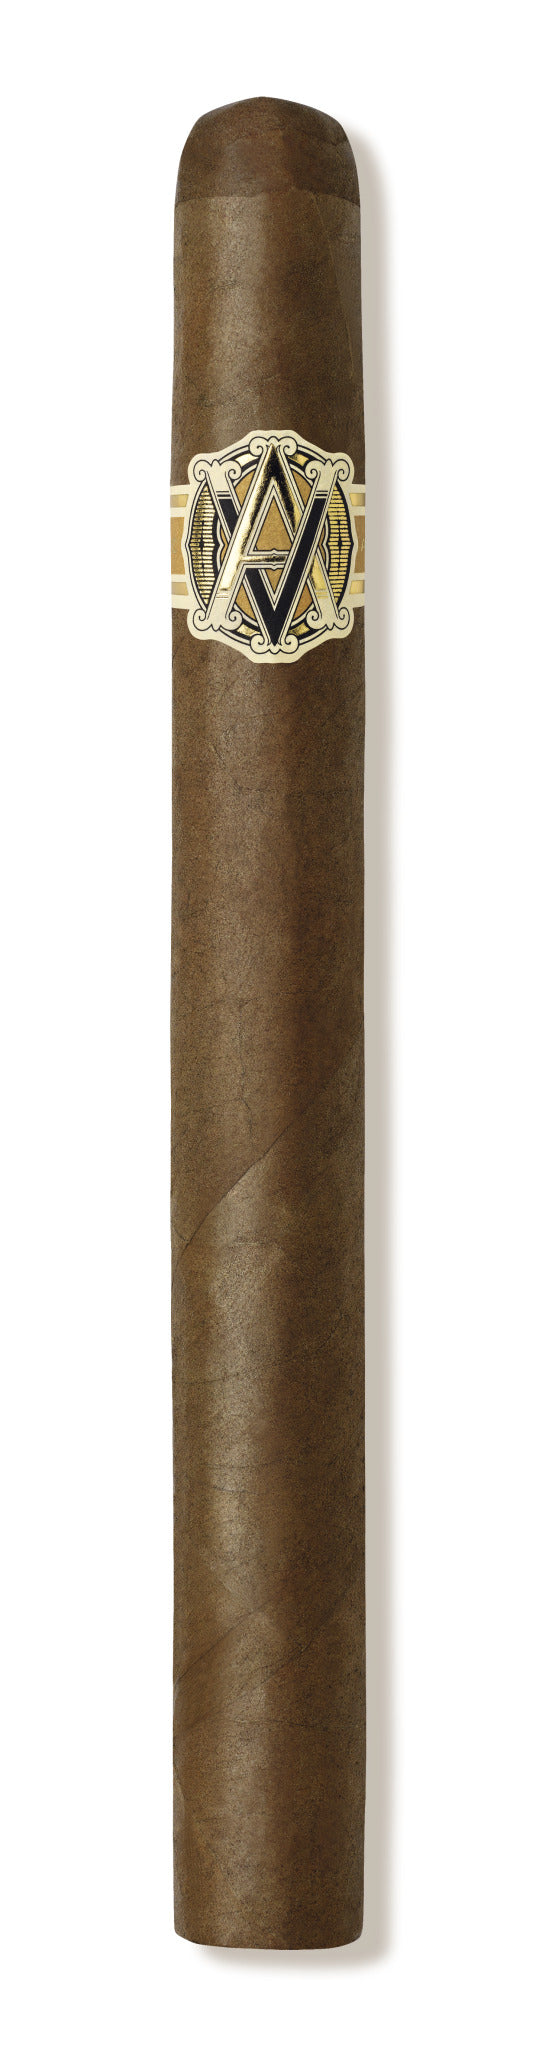 Avo Cigars Classic Maduro No.3 Toro Grande Featured Image